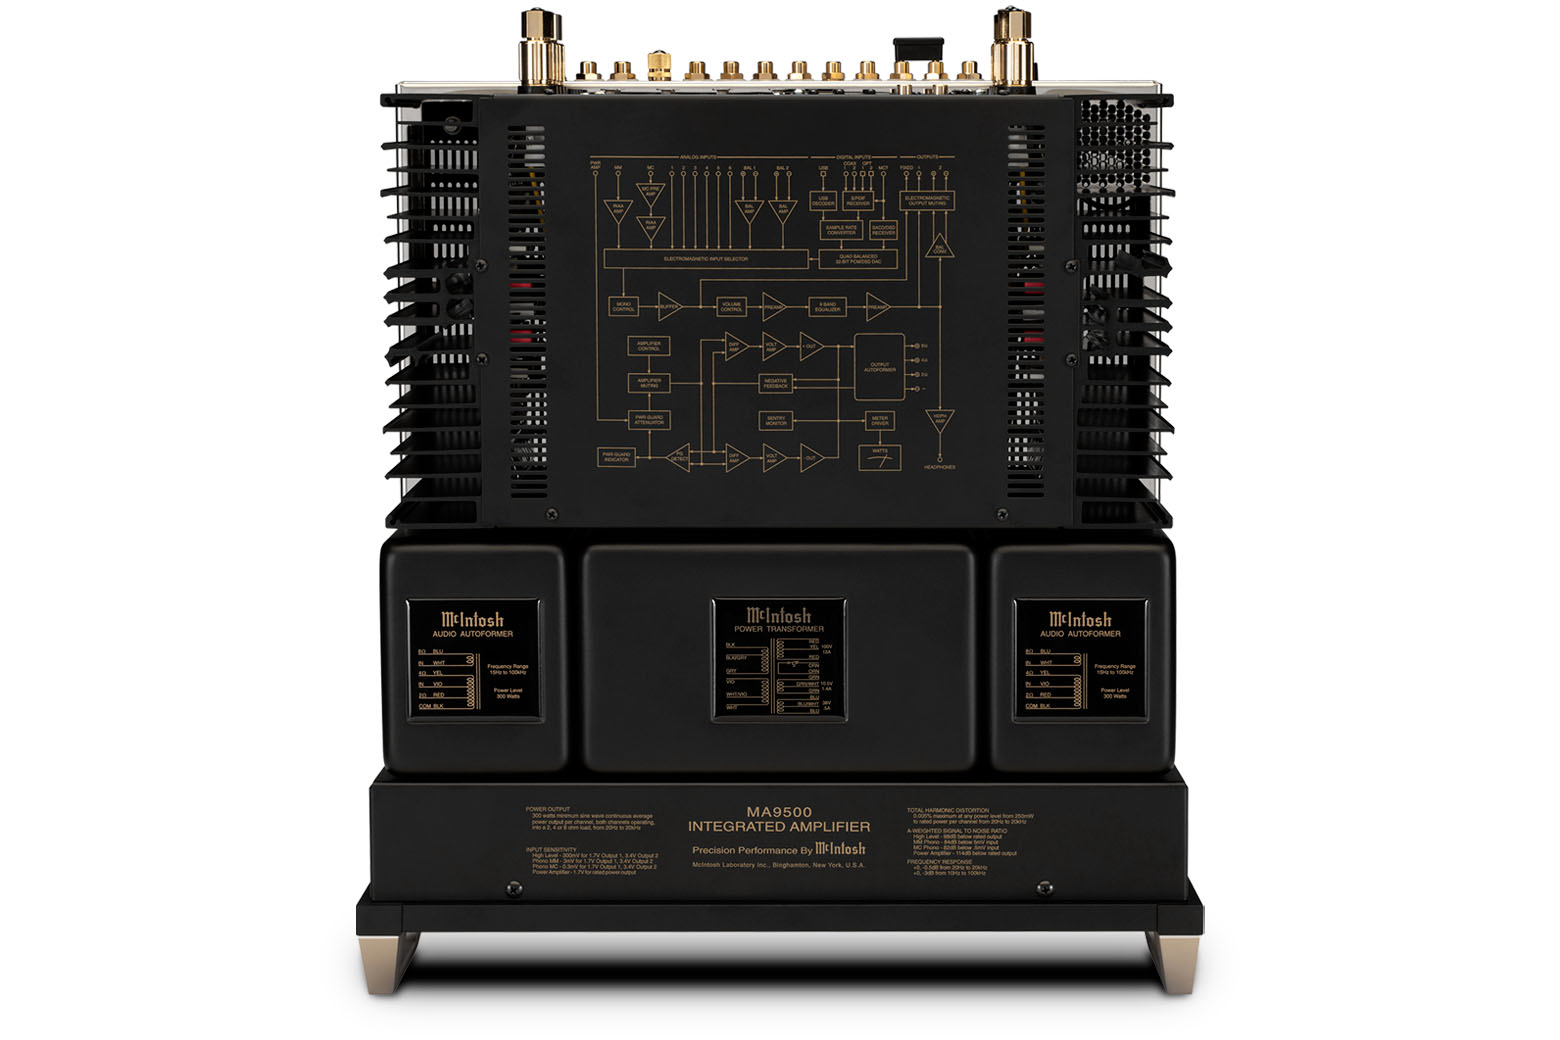 McIntosh MA9500 2-Channel Entegre Ampliler